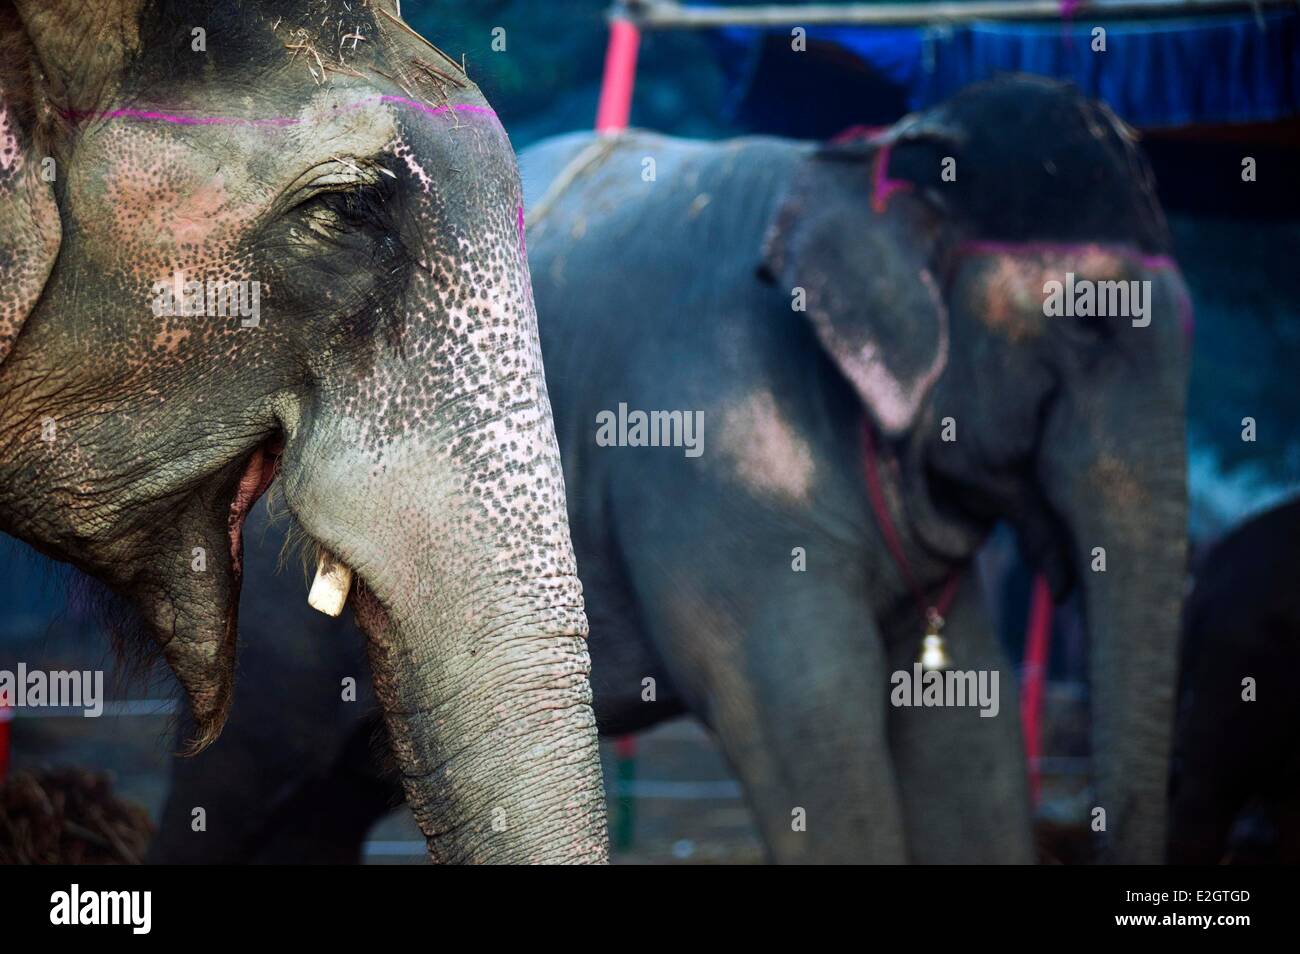 India Bihar state Patna Sonepur Sonepur Mela Cattle Fait (largest in Asia) painted elephant Stock Photo